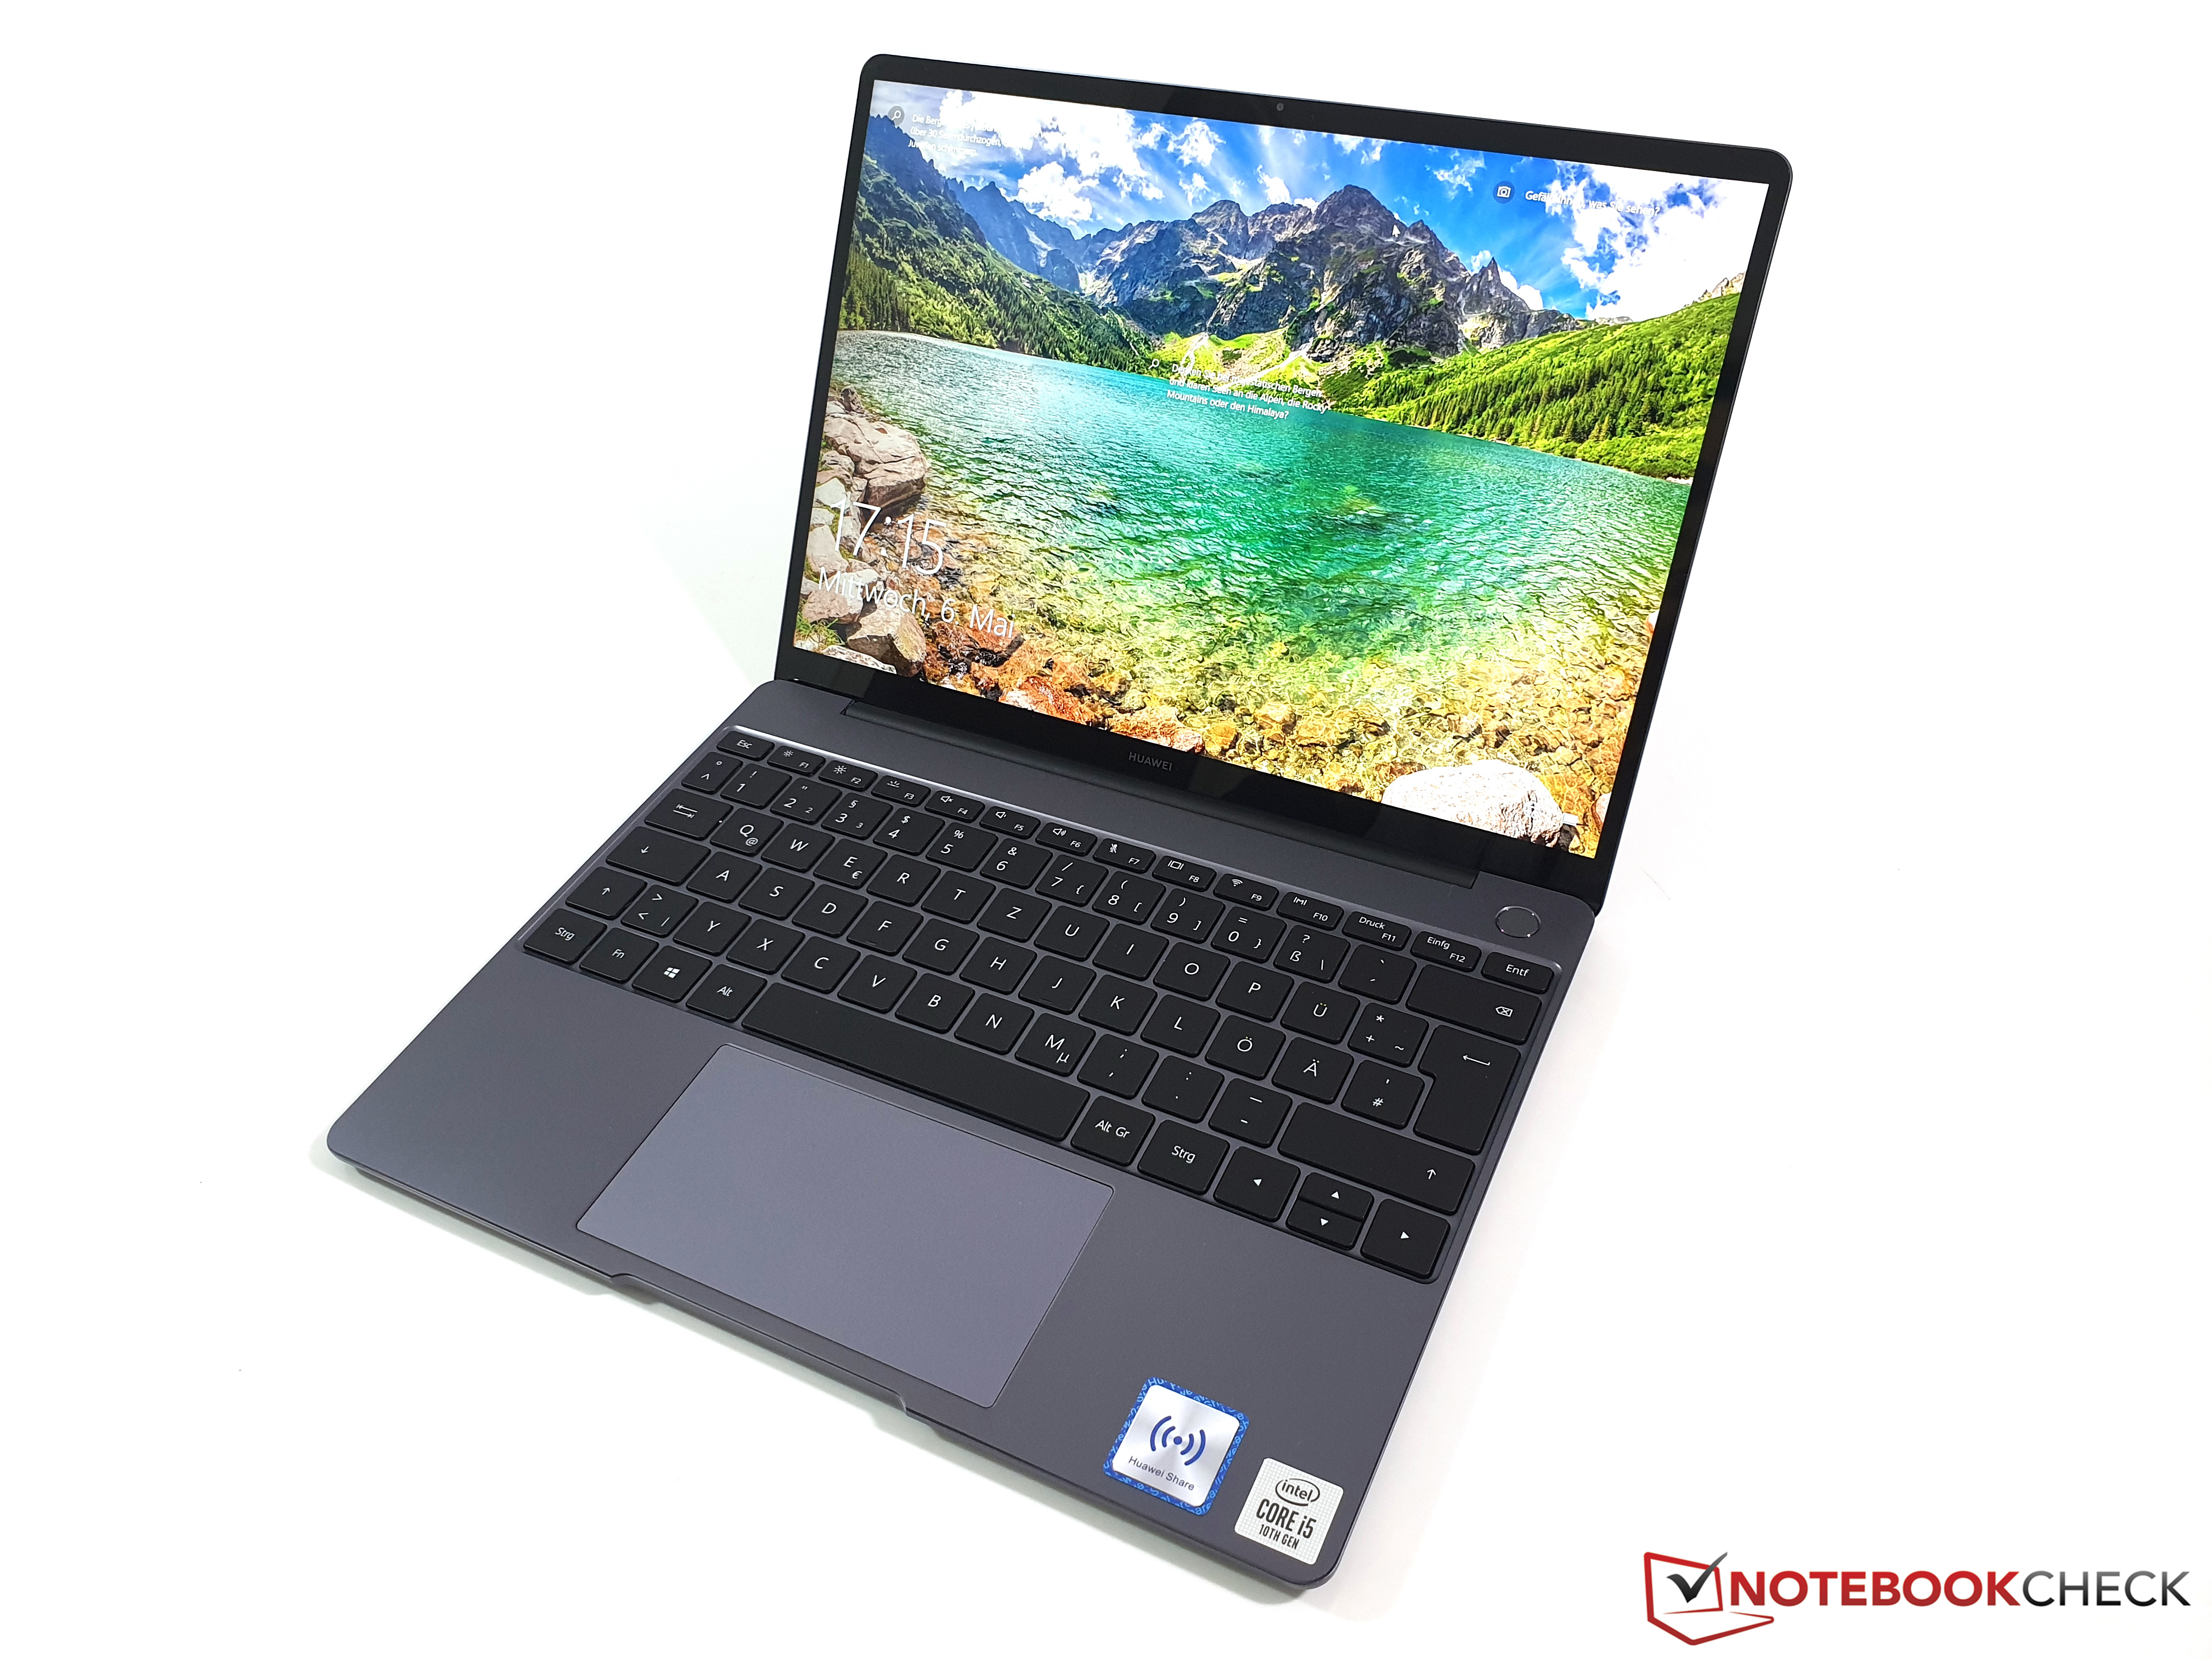 Huawei MateBook 13 2020 Subnotebook Review – Comet Lake update